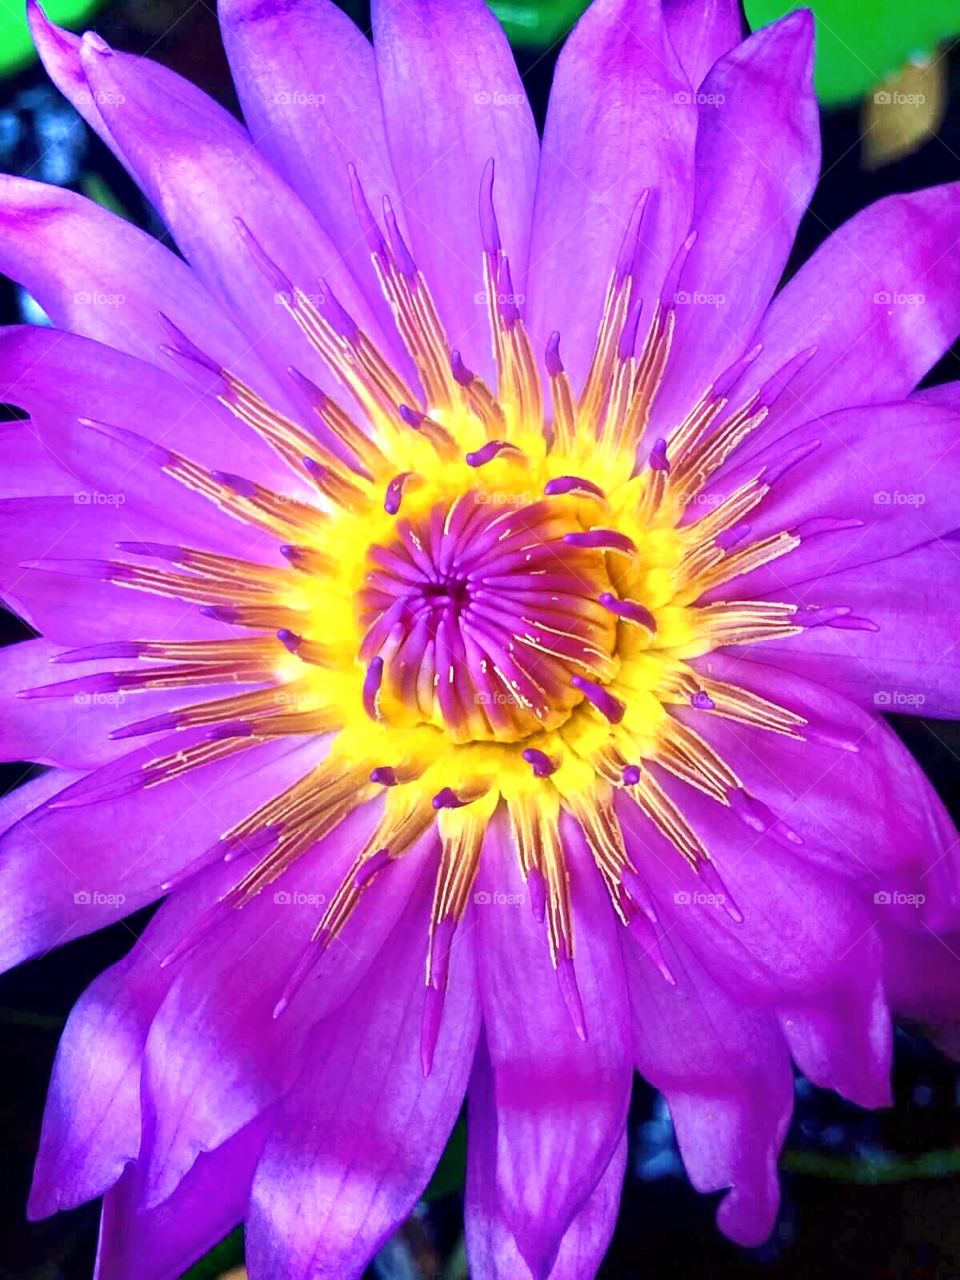 Lotus with purple flowers